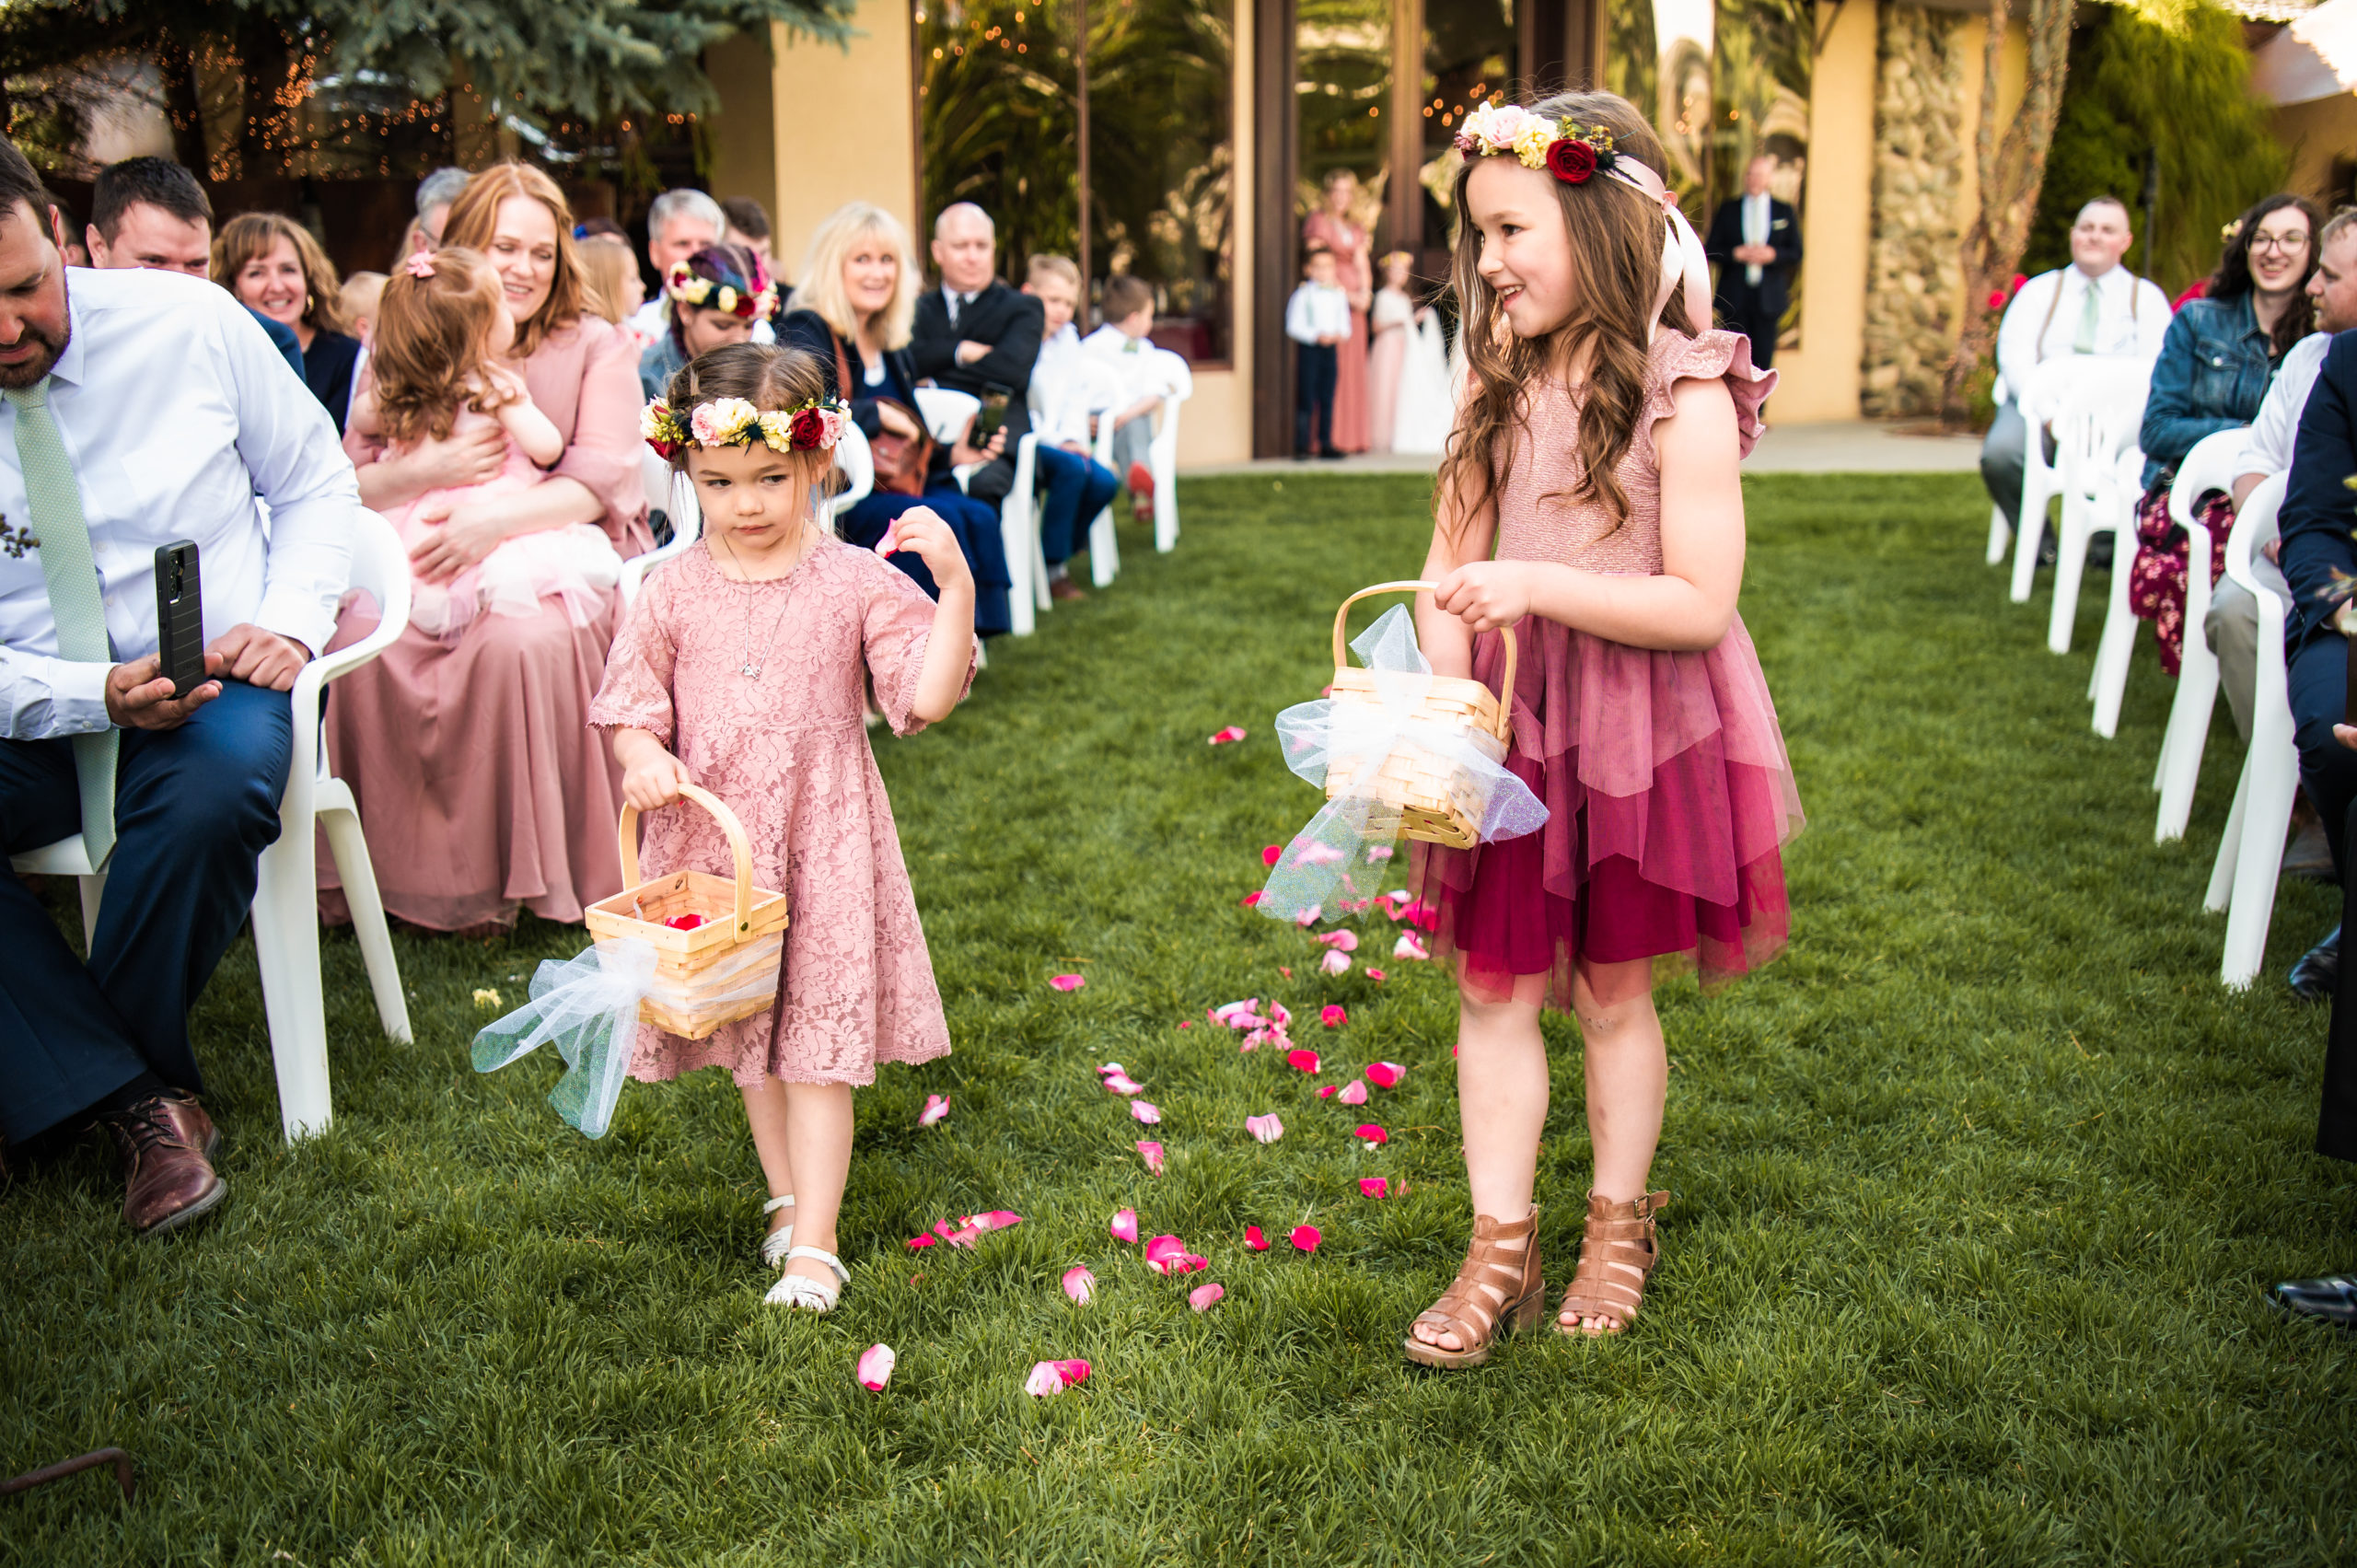 Flower girls at elegant rose river wedding reception center wearing shades of pink tossing flowers